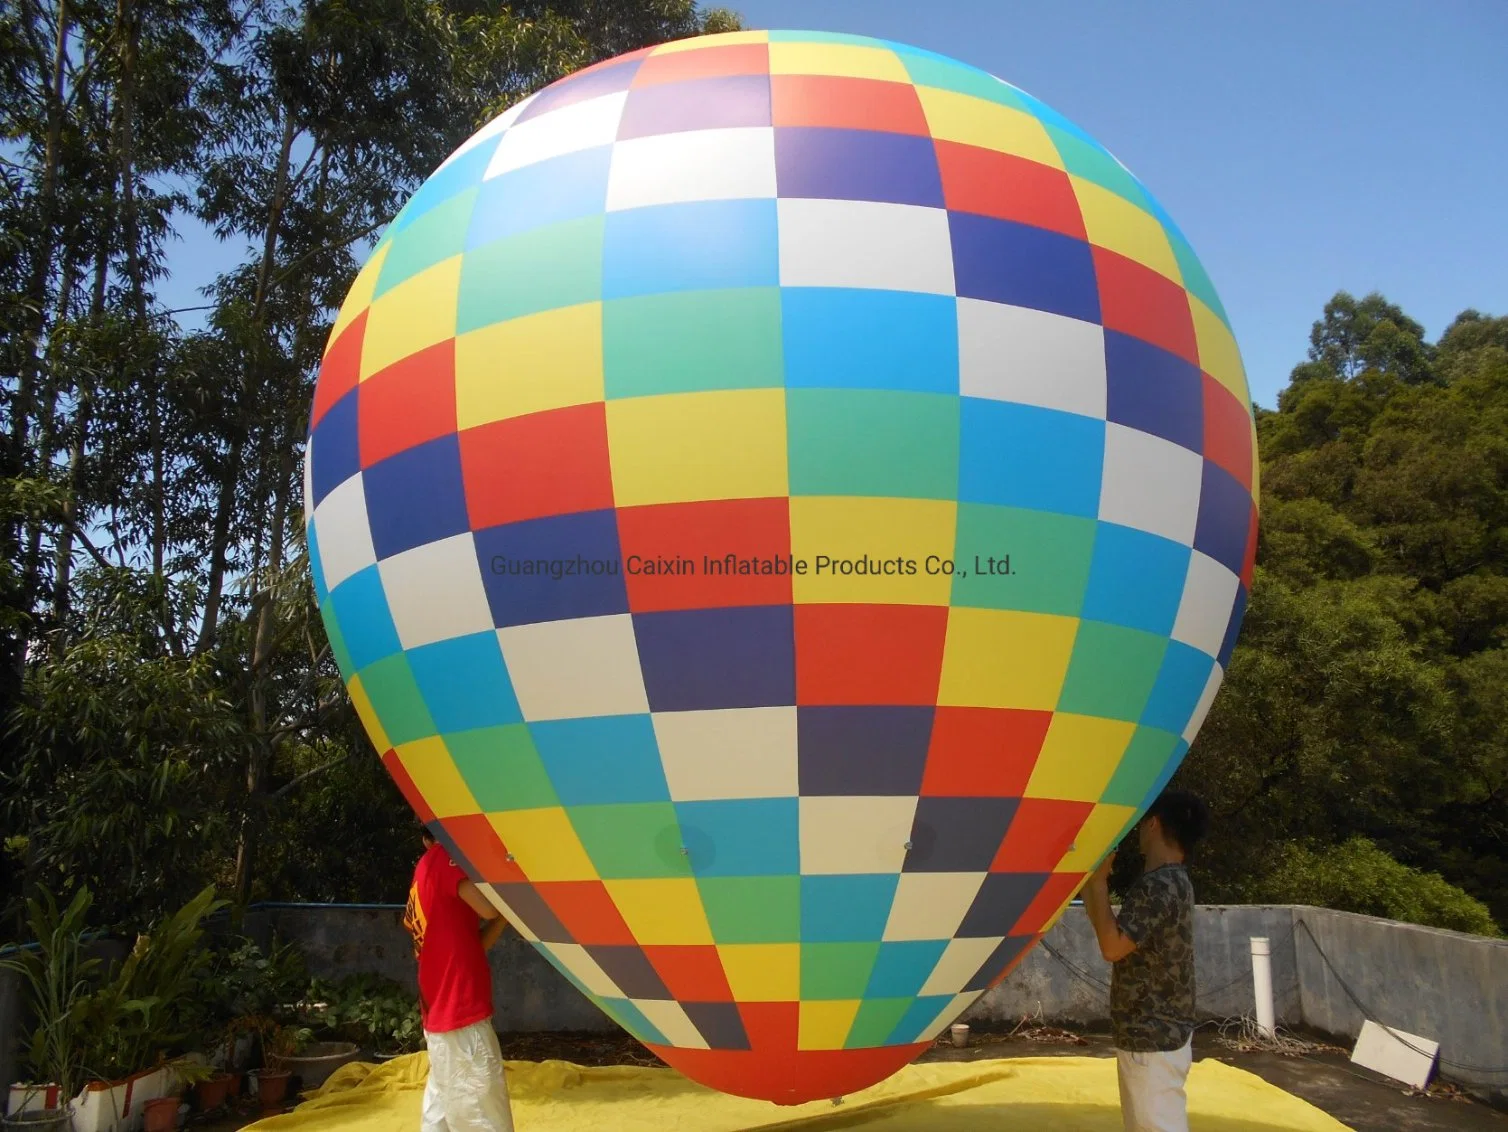 Boyi flotante Publicidad Aire caliente Helio inflable globo